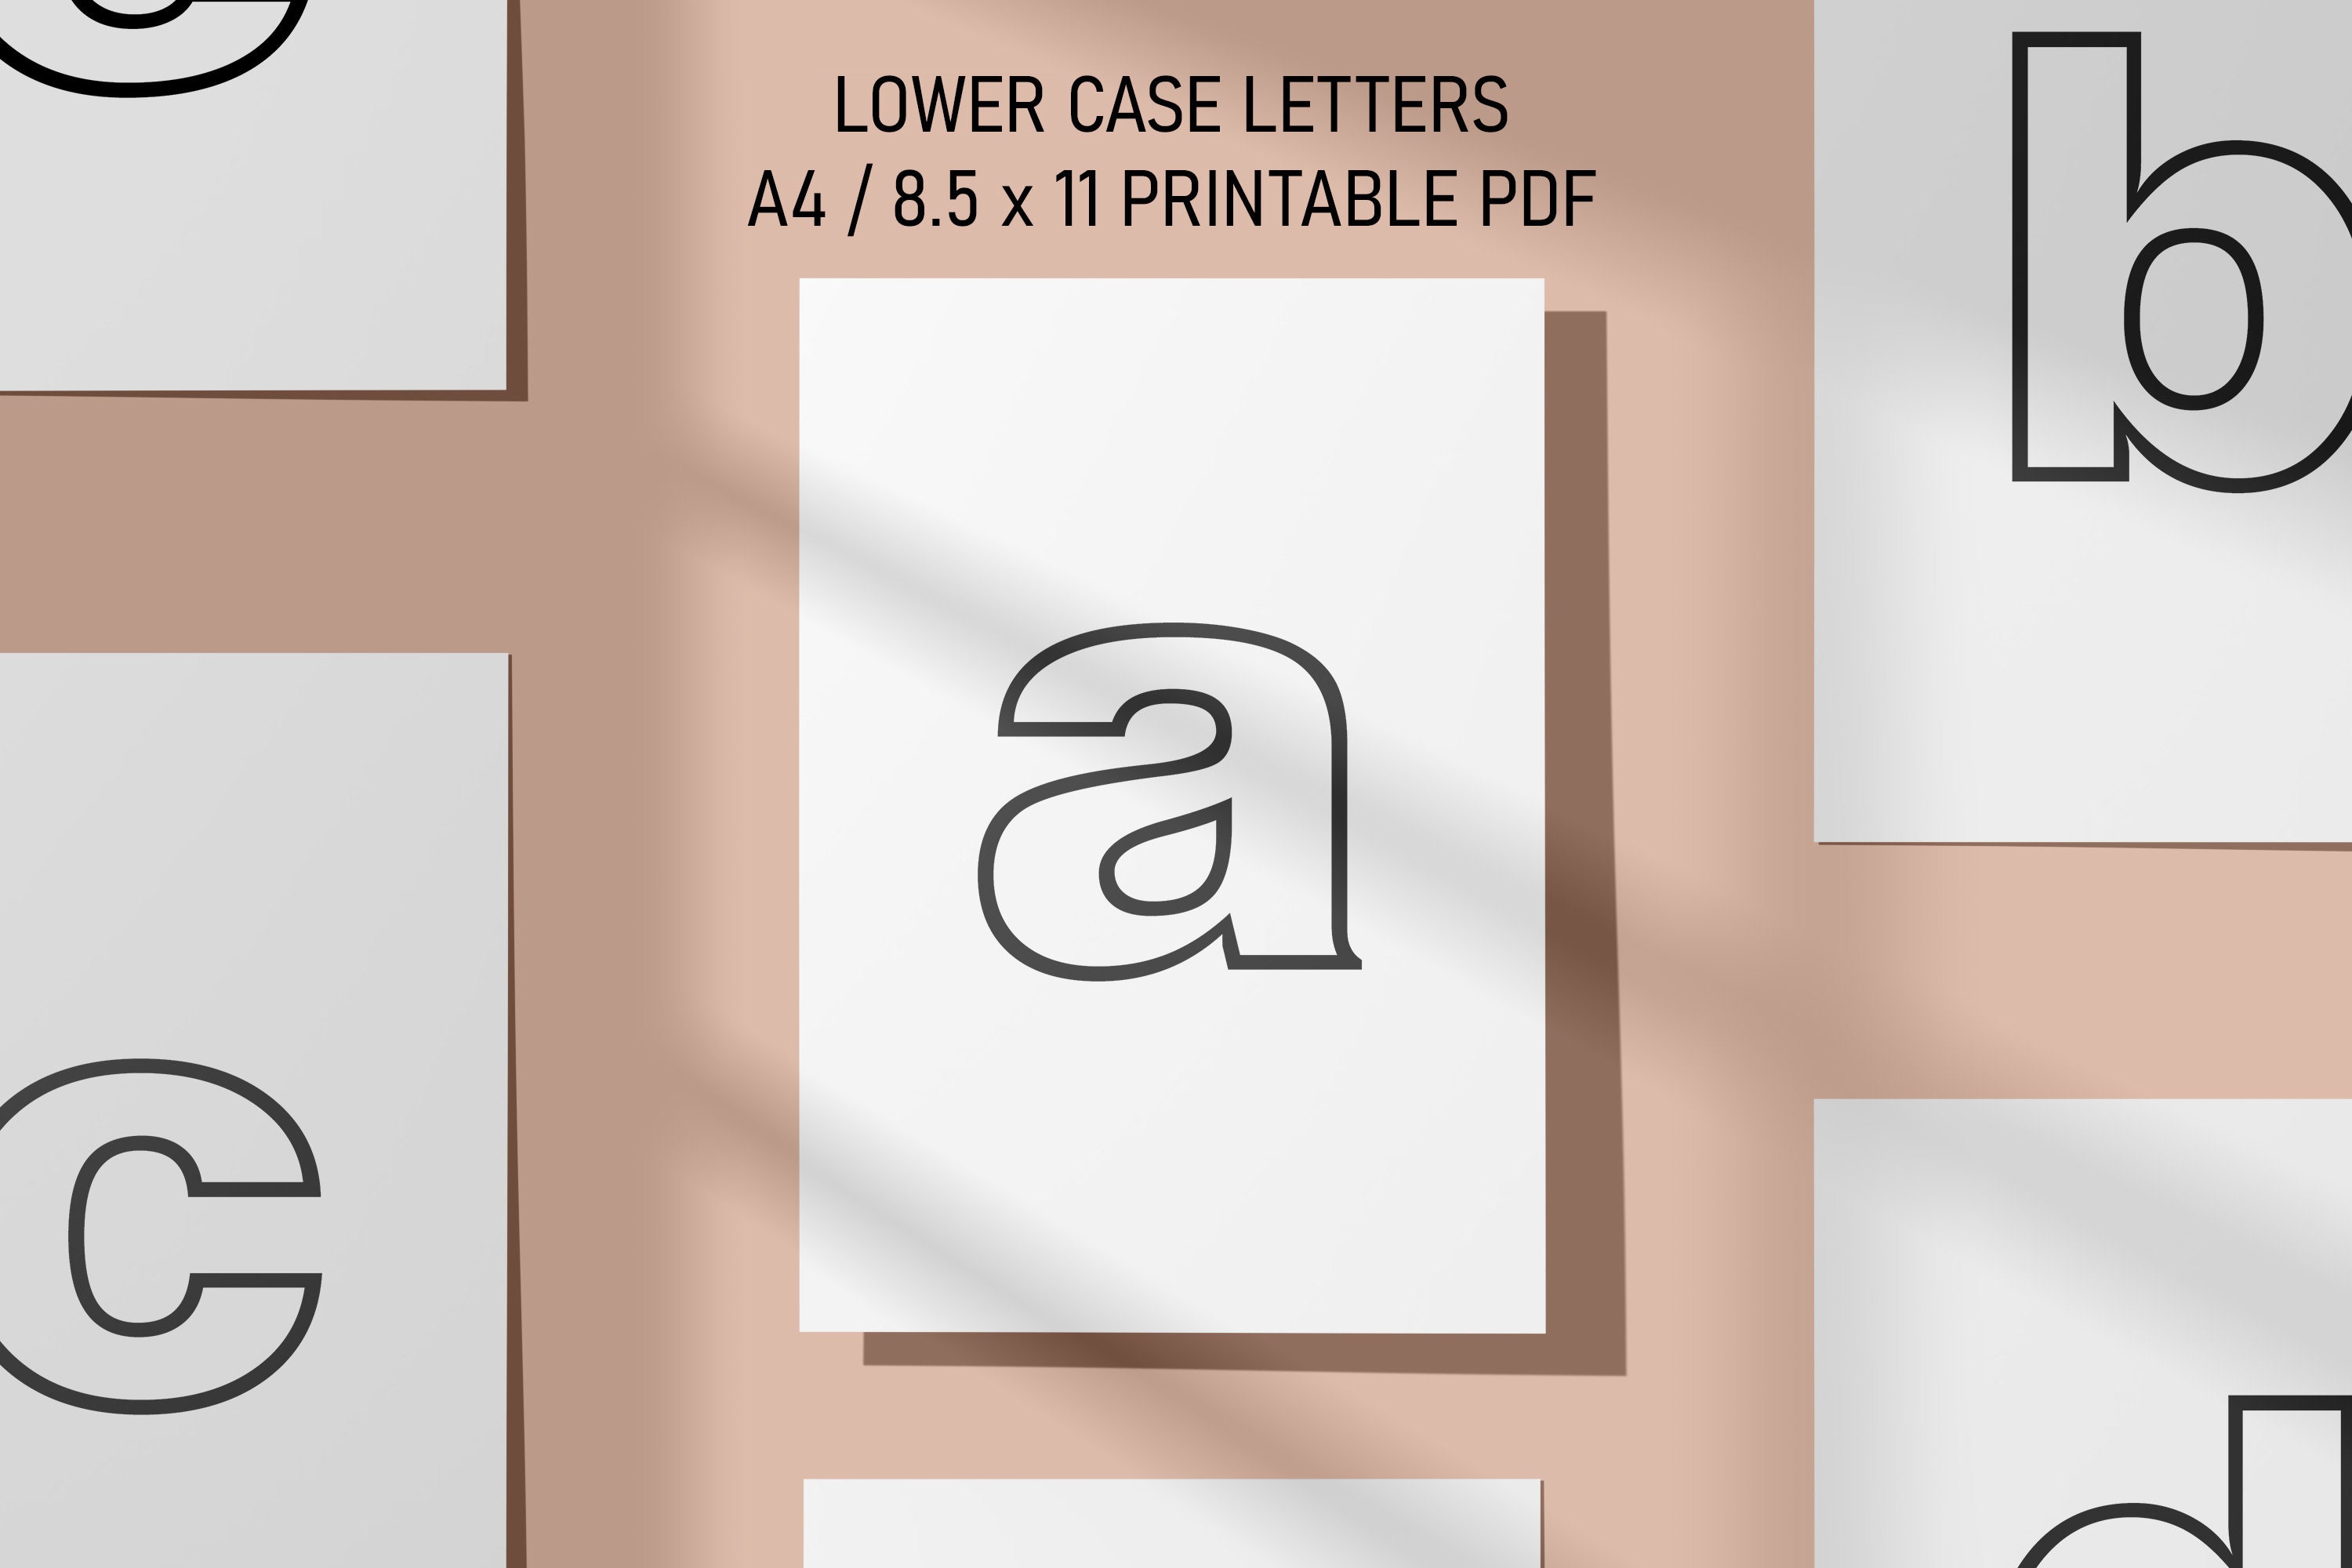 alphabet letter stencils to print free - Google Search  Alphabet letter  templates, Free printable alphabet letters, Alphabet letters to print